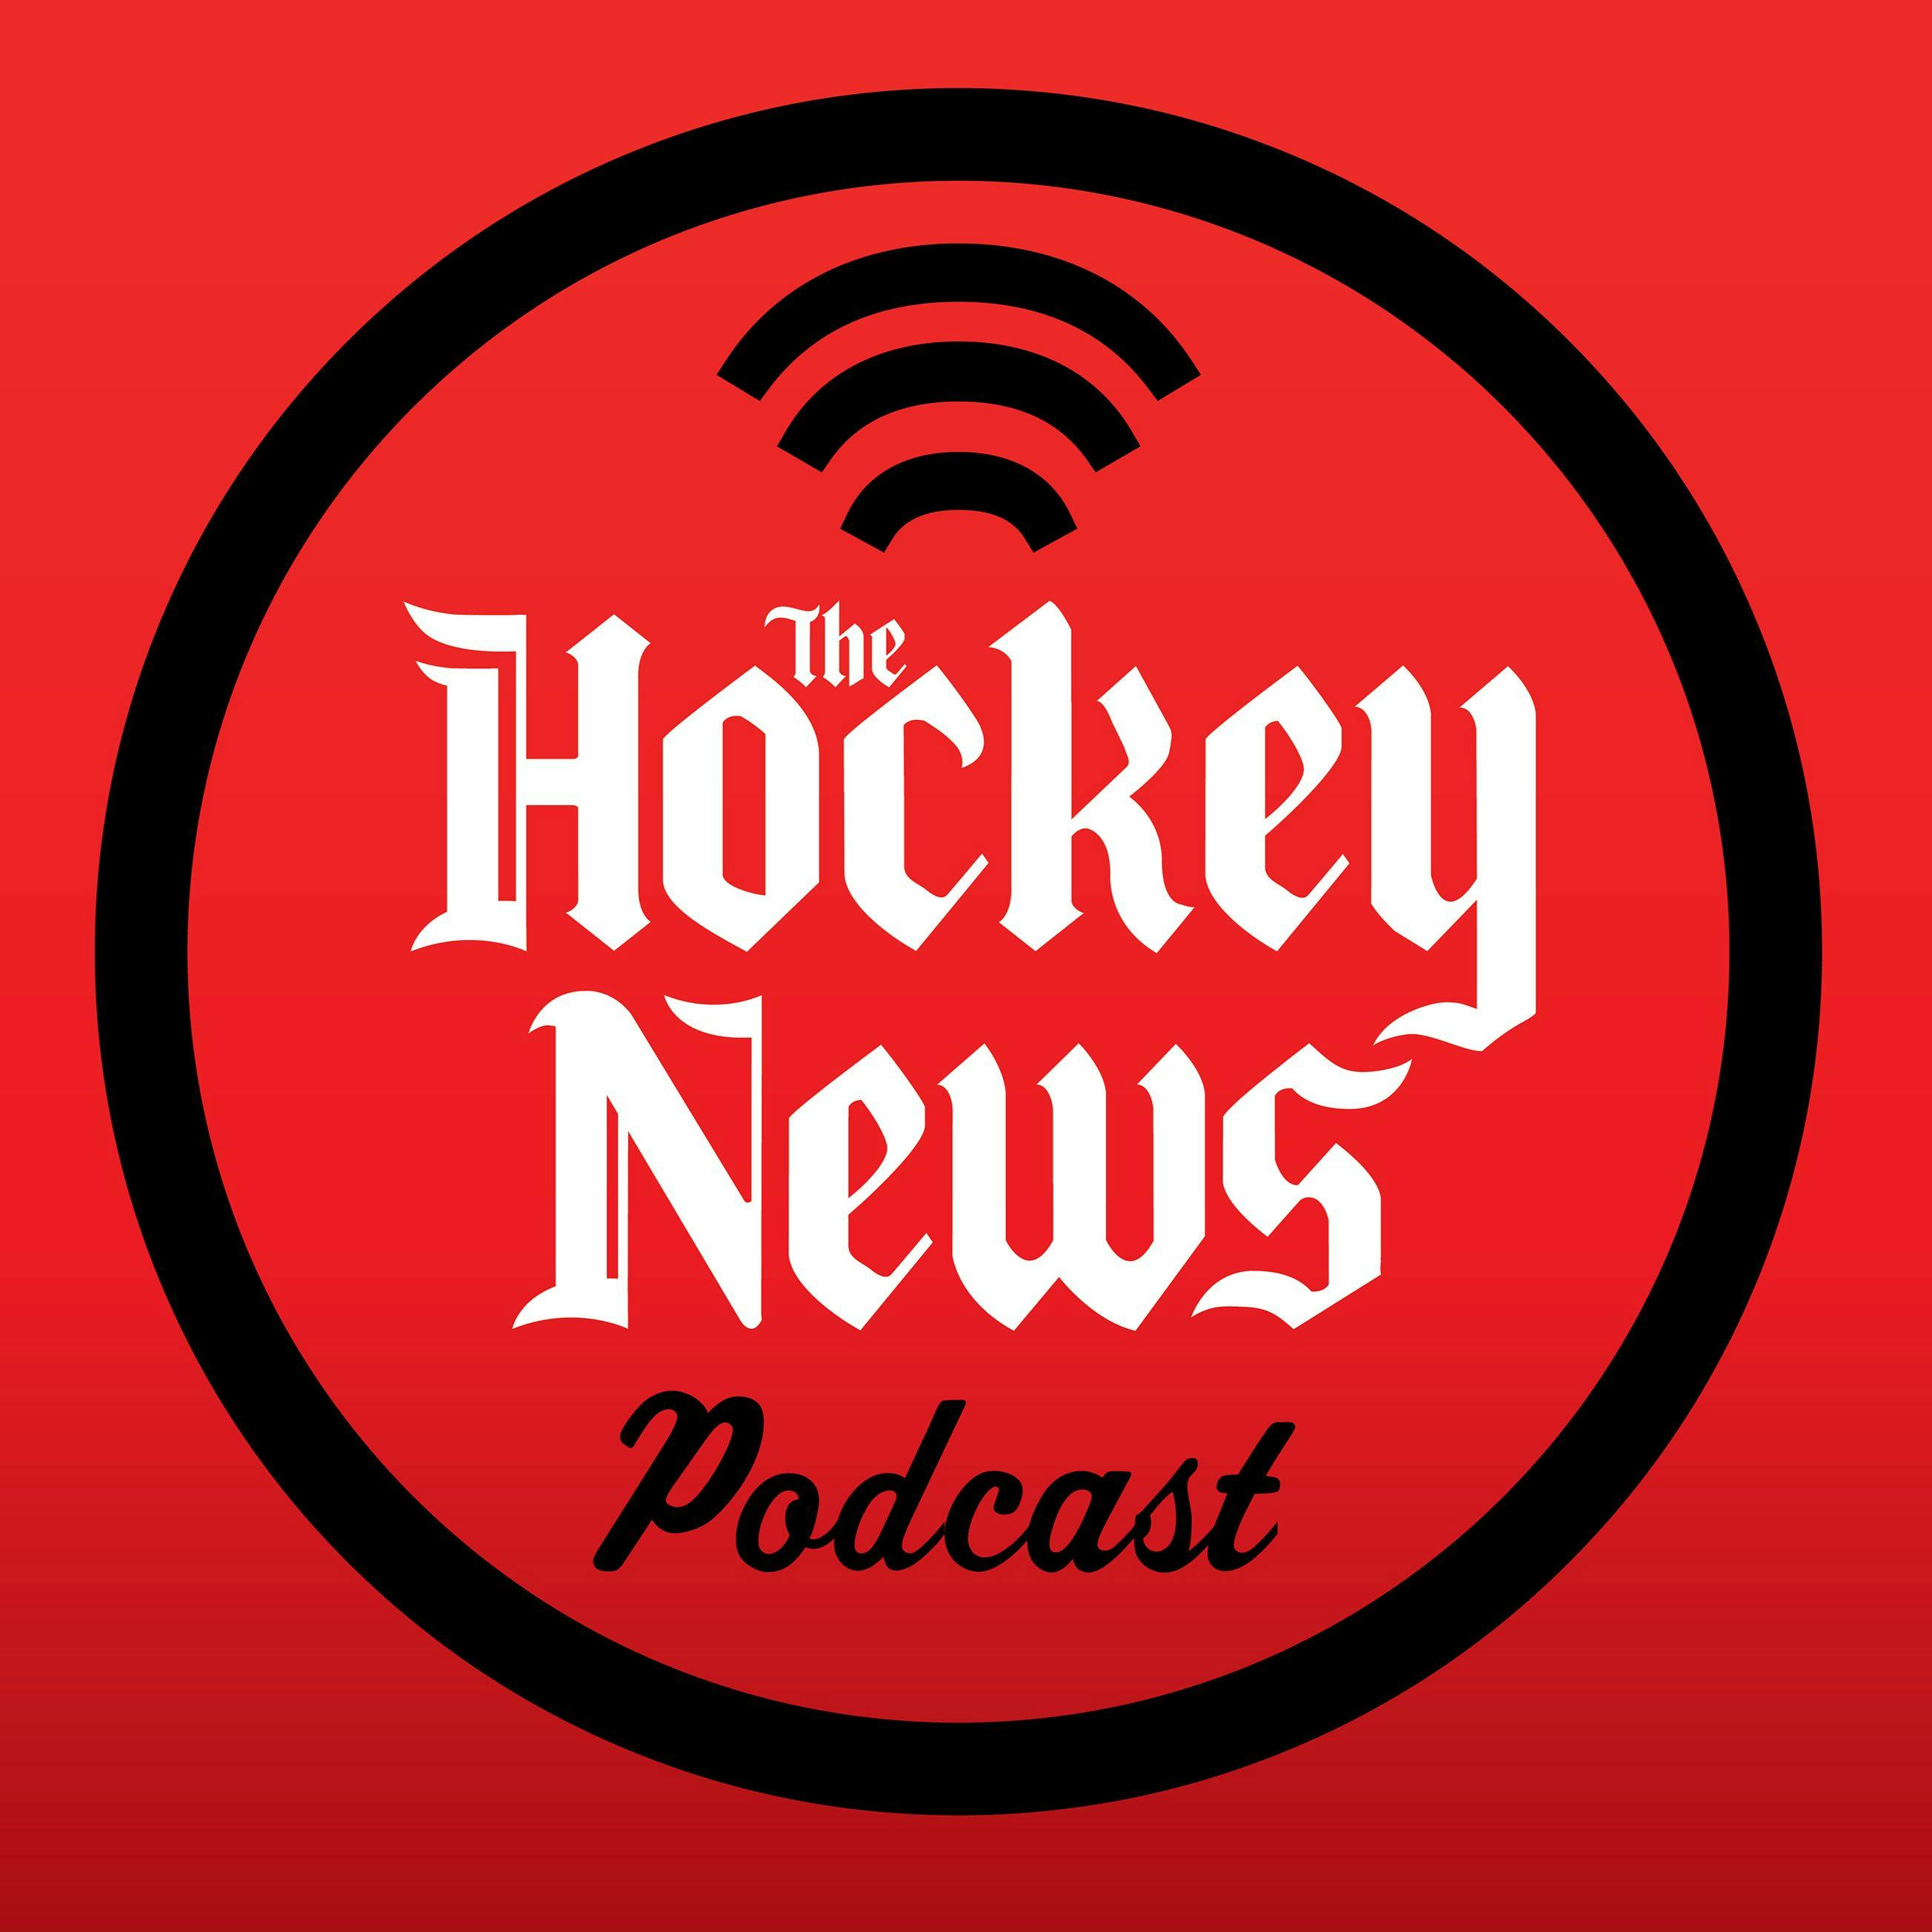 The Hockey News Podcast: Should the IIHF Scrap the 2021 World Juniors?